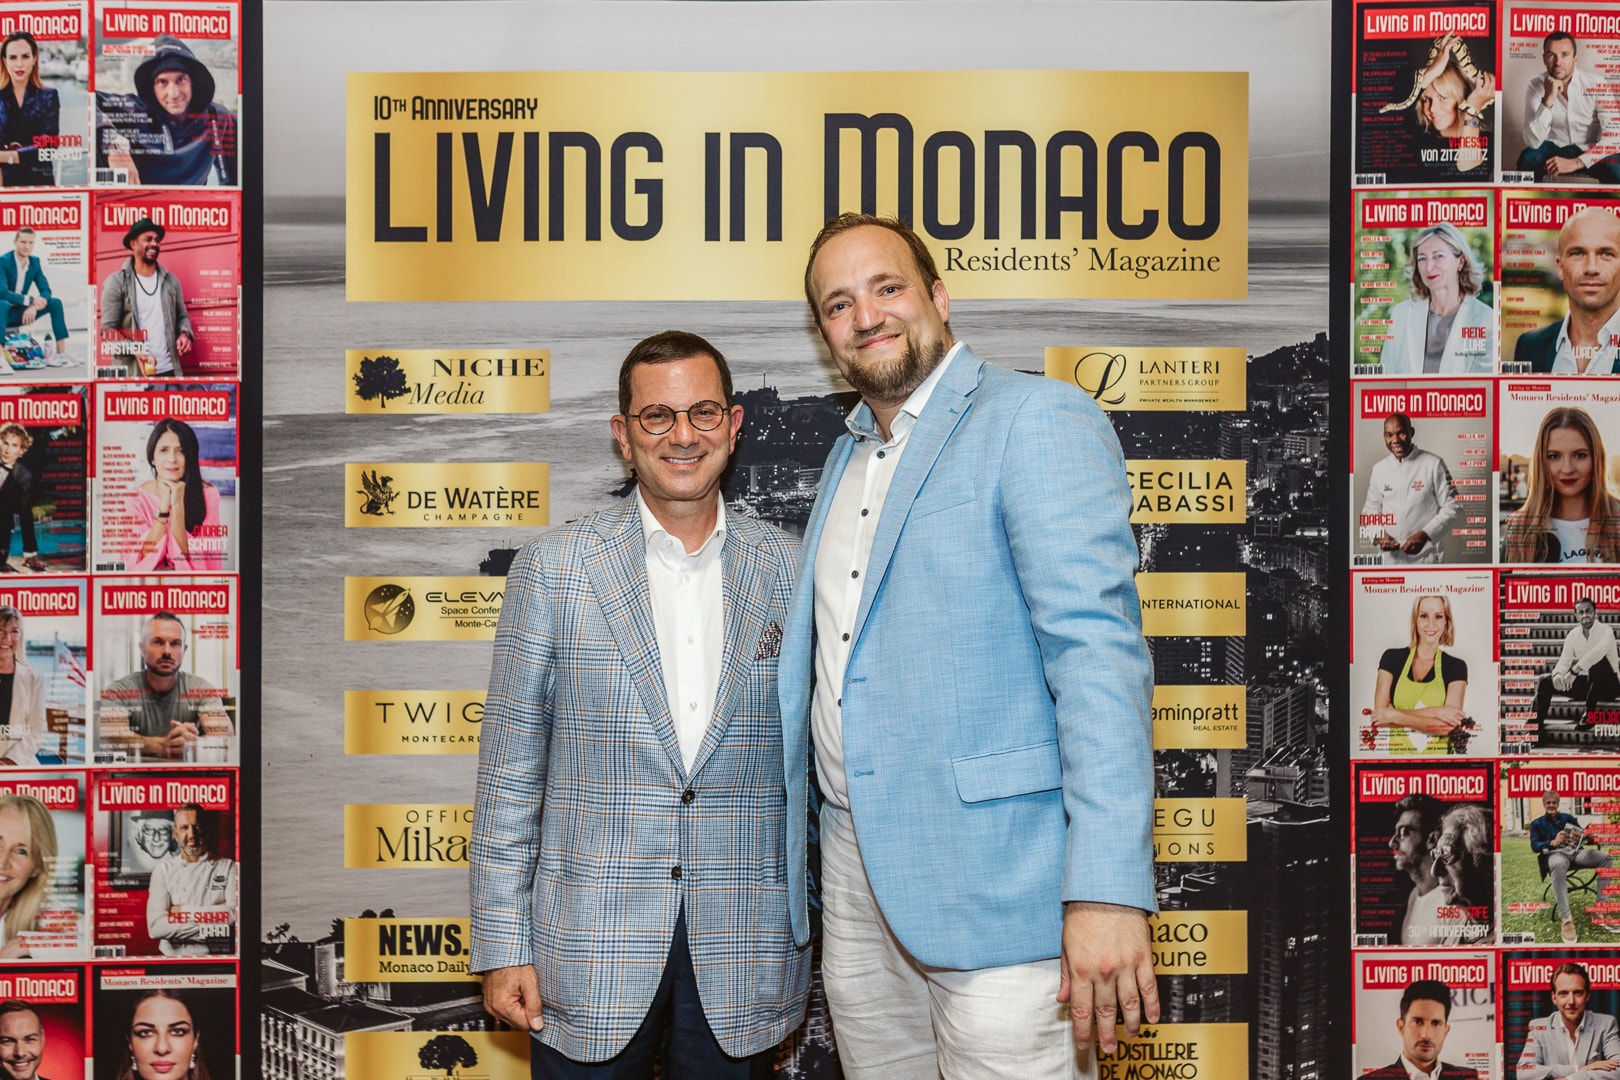 10th Anniversary Celebration of the Living in Monaco magazine